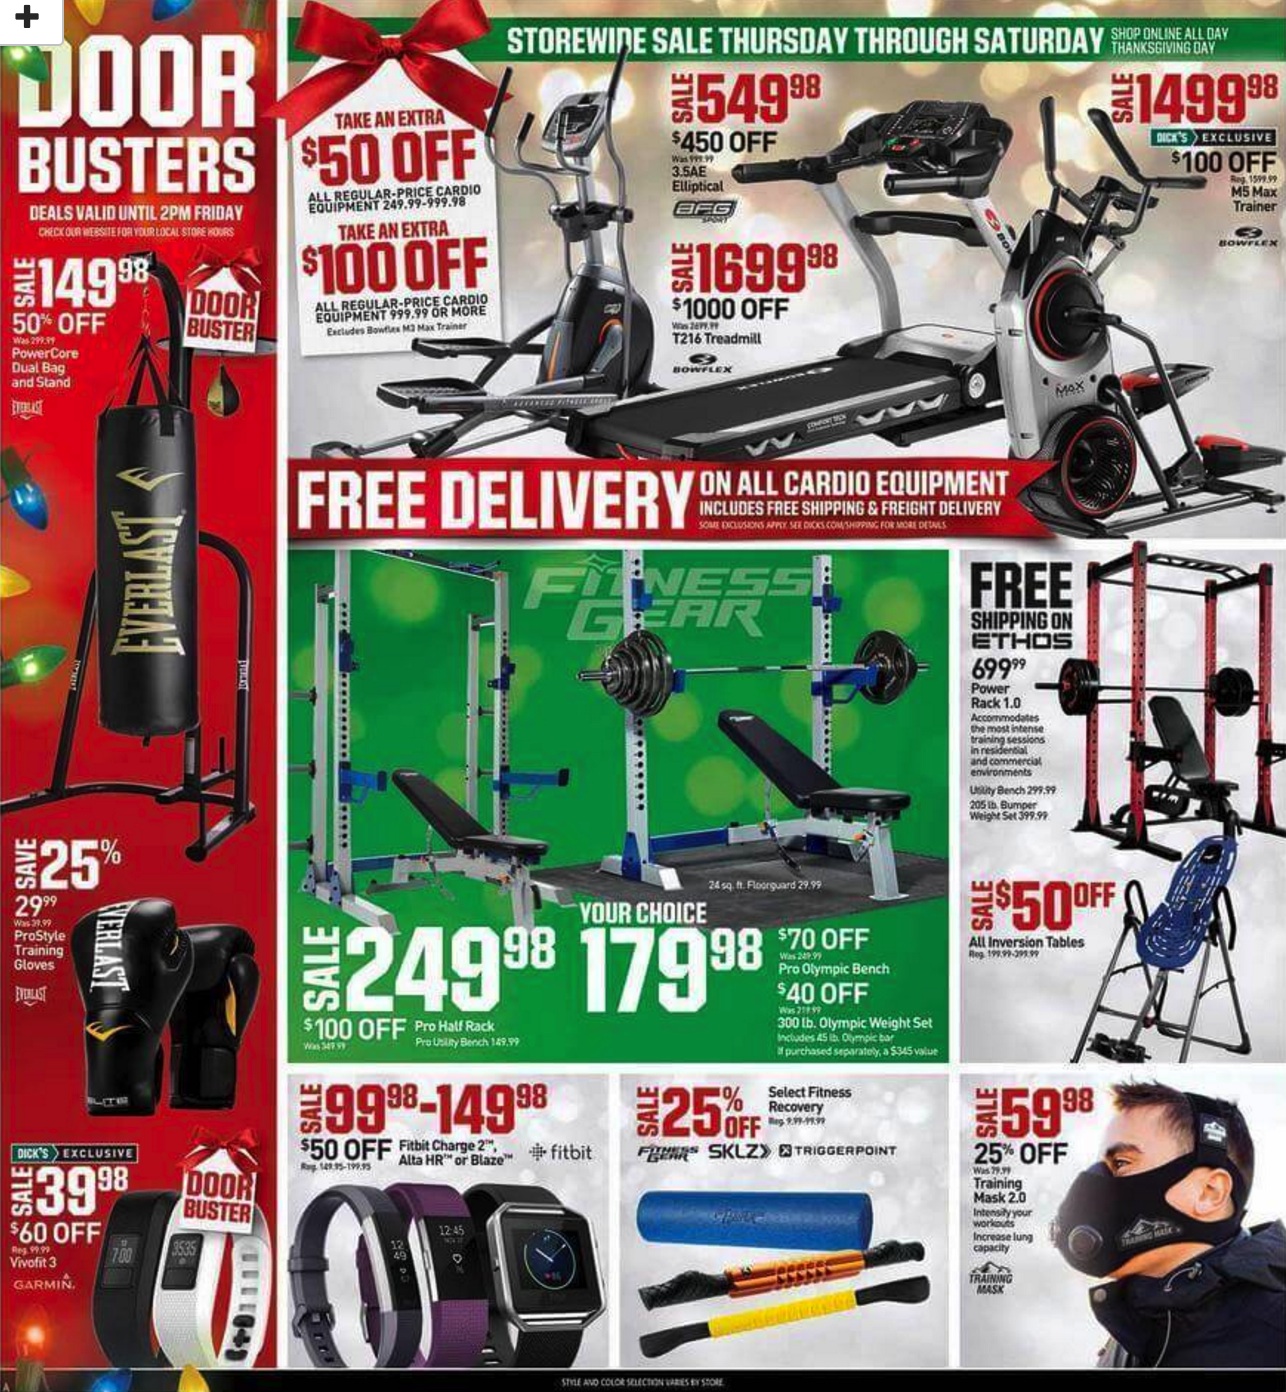 Dick’s Sporting Goods Black Friday Ad Deals 2018 - Funtober